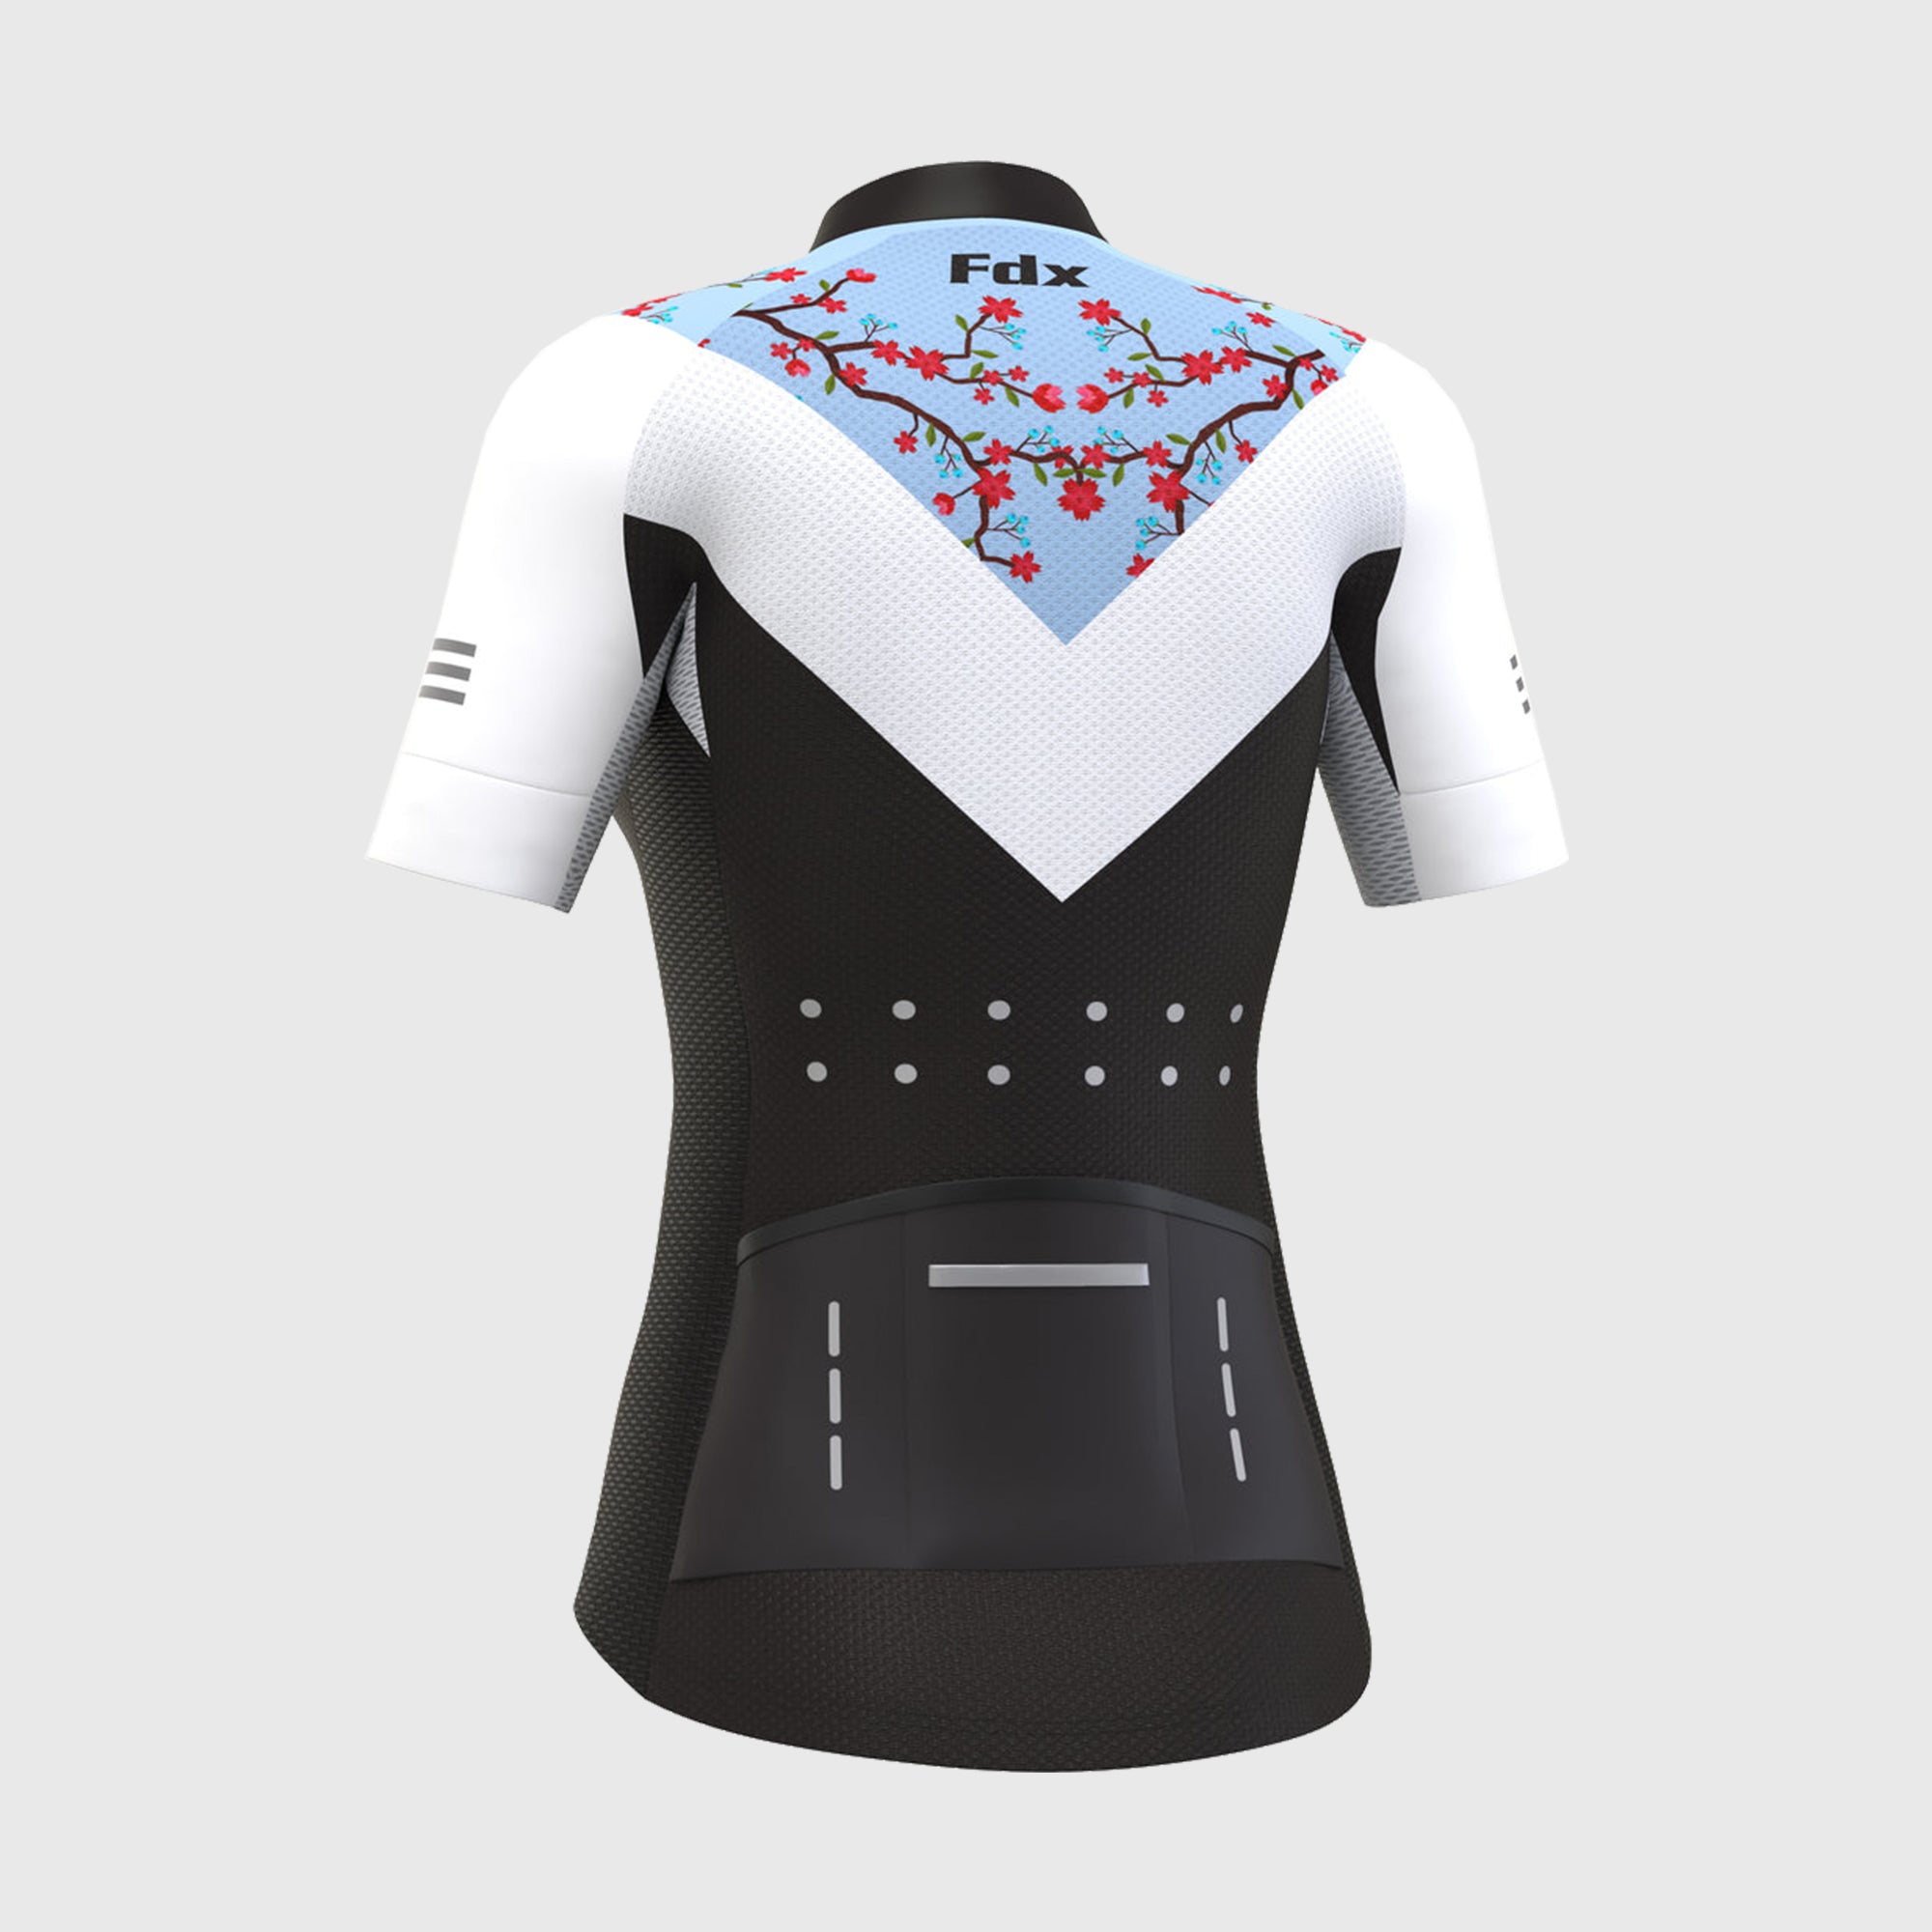 Fdx Women's Blue & White Short Sleeve Cycling Jersey Breathable Quick Dry Mesh Fleece Full Zip Hi Viz Reflectors & Pockets Summer Cycling Gear 